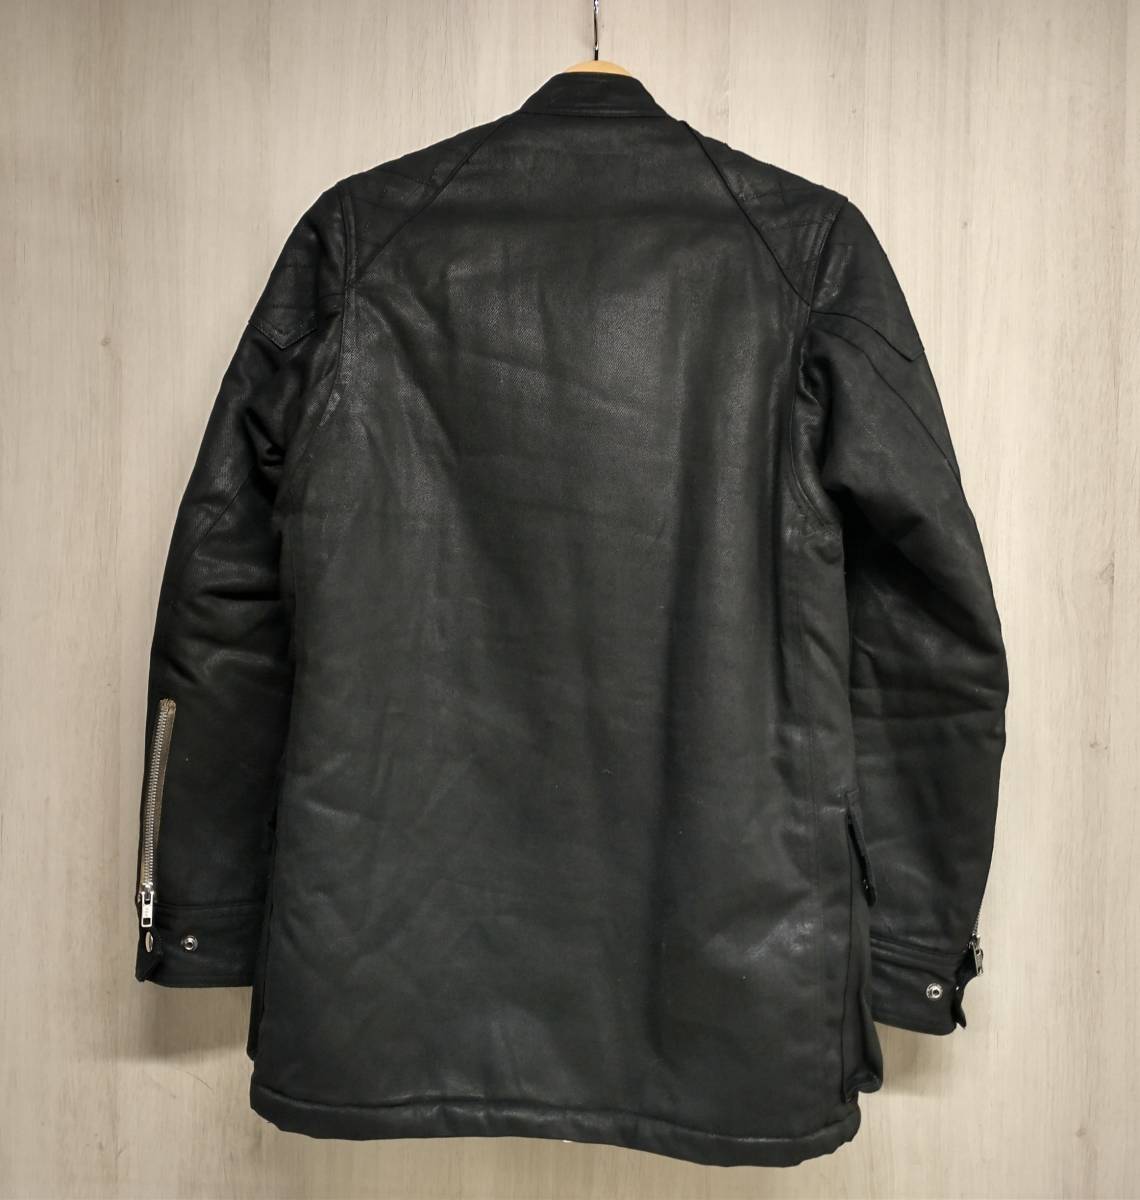 CYbER dYNE Black Label taAR Flame master jacket サイバーダイン フレームマスタージャケット ブラック コットン 裏ボア 日本製_画像3